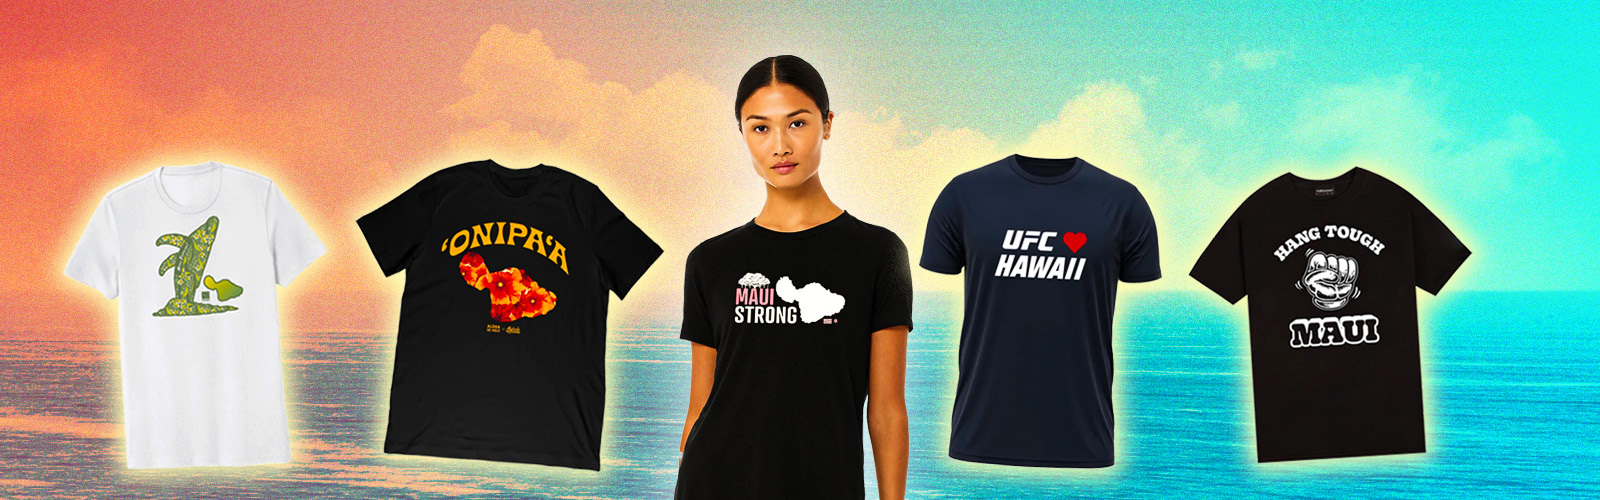 UFC Store Ufc Hawaii Charity Shirt - teejeep